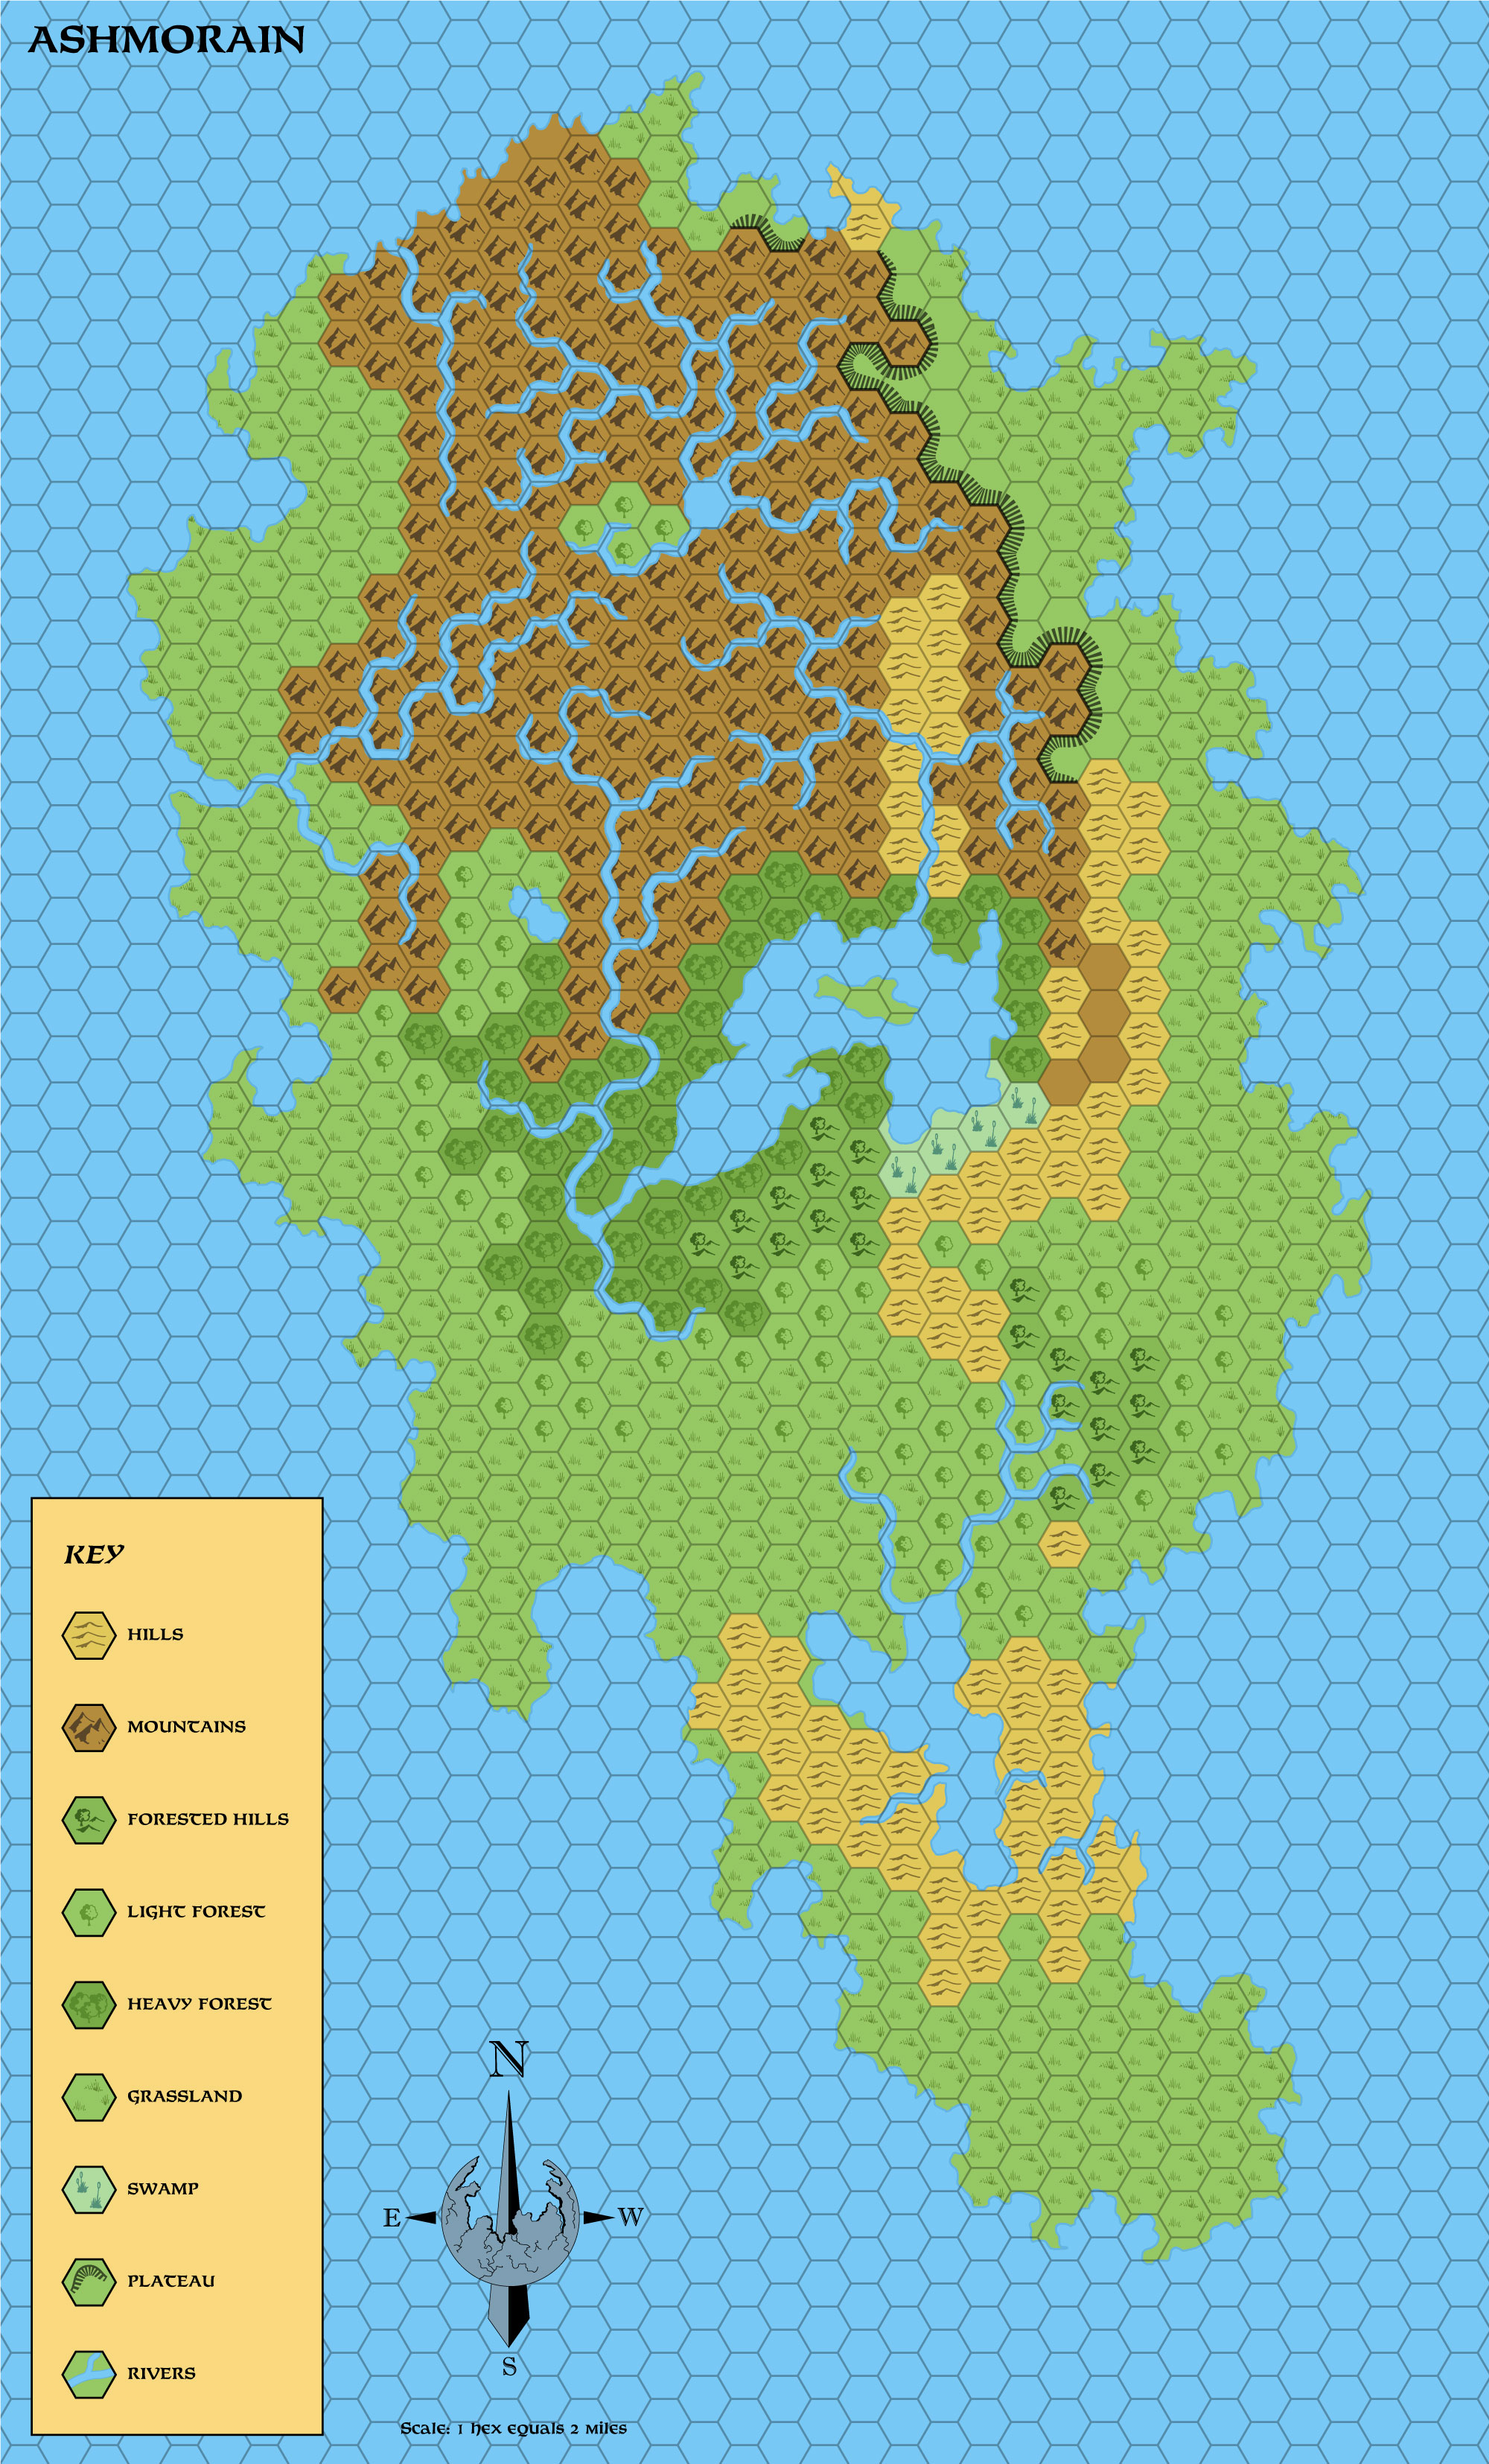 Replica of HWA2’s poster map of Ashmorain, 2 miles per hex